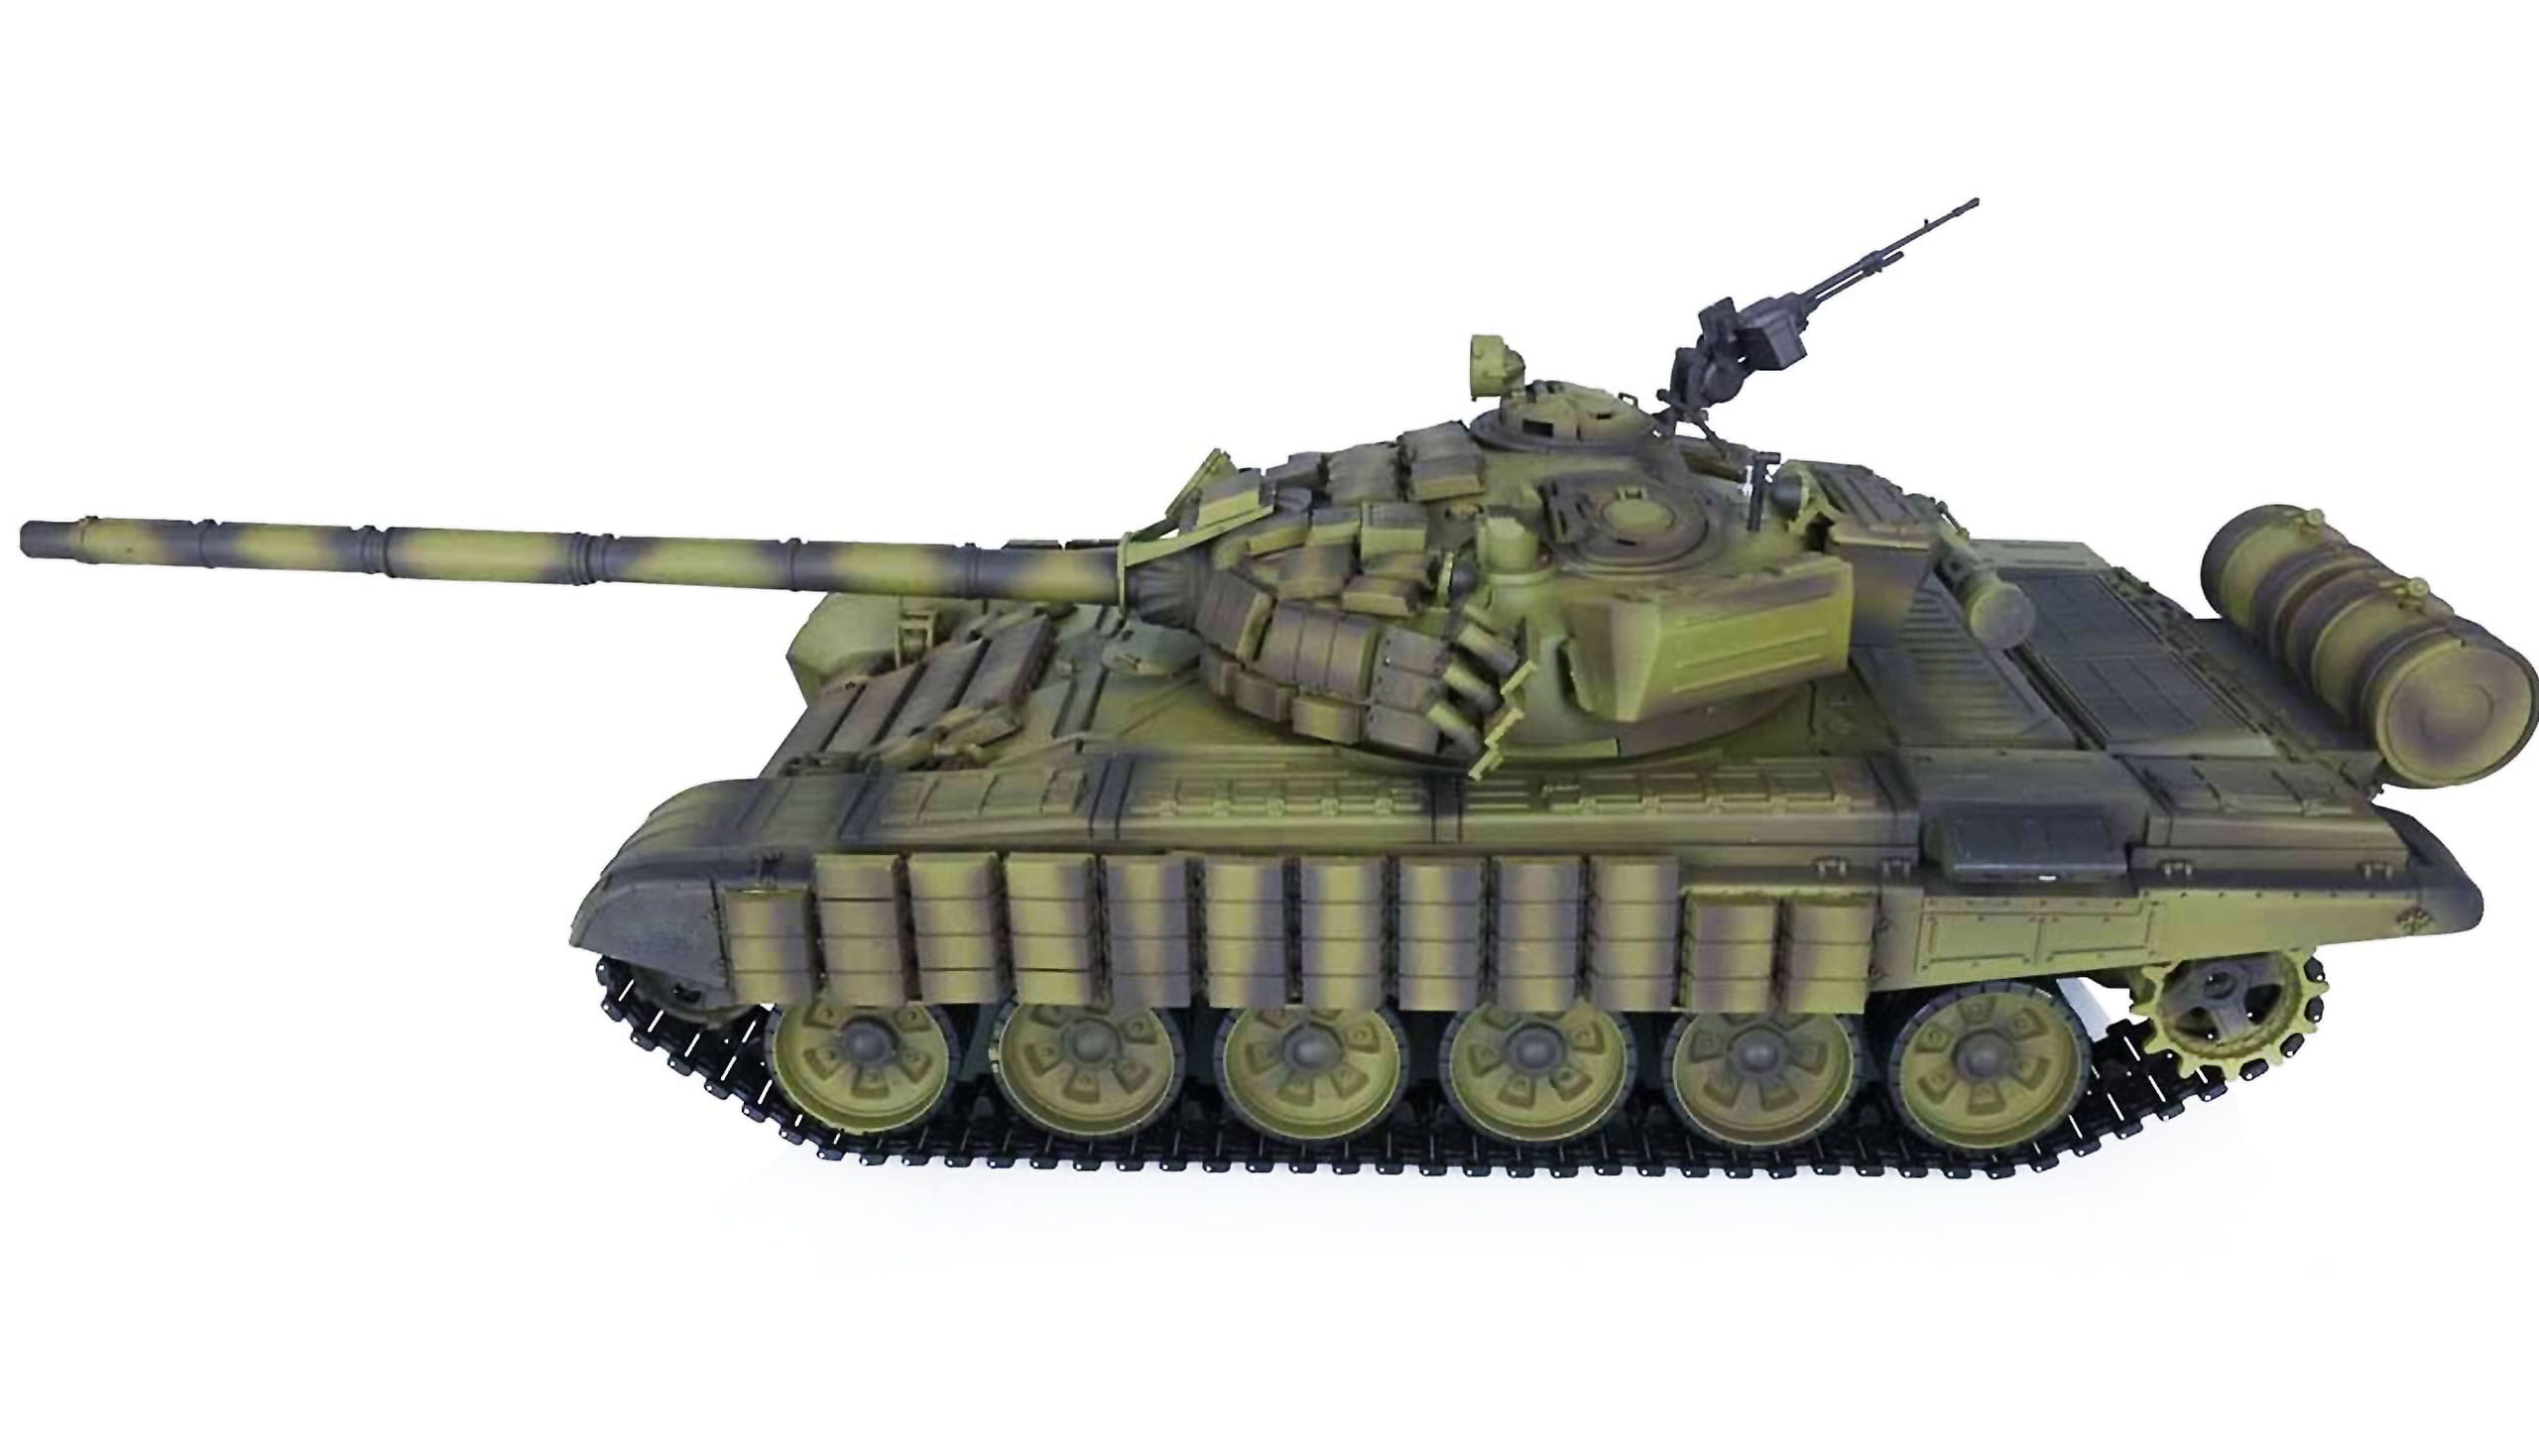 Amewi RC Panzer T-72 1:16 Advanced Line IR, BB Schuss, Rauch, RTR